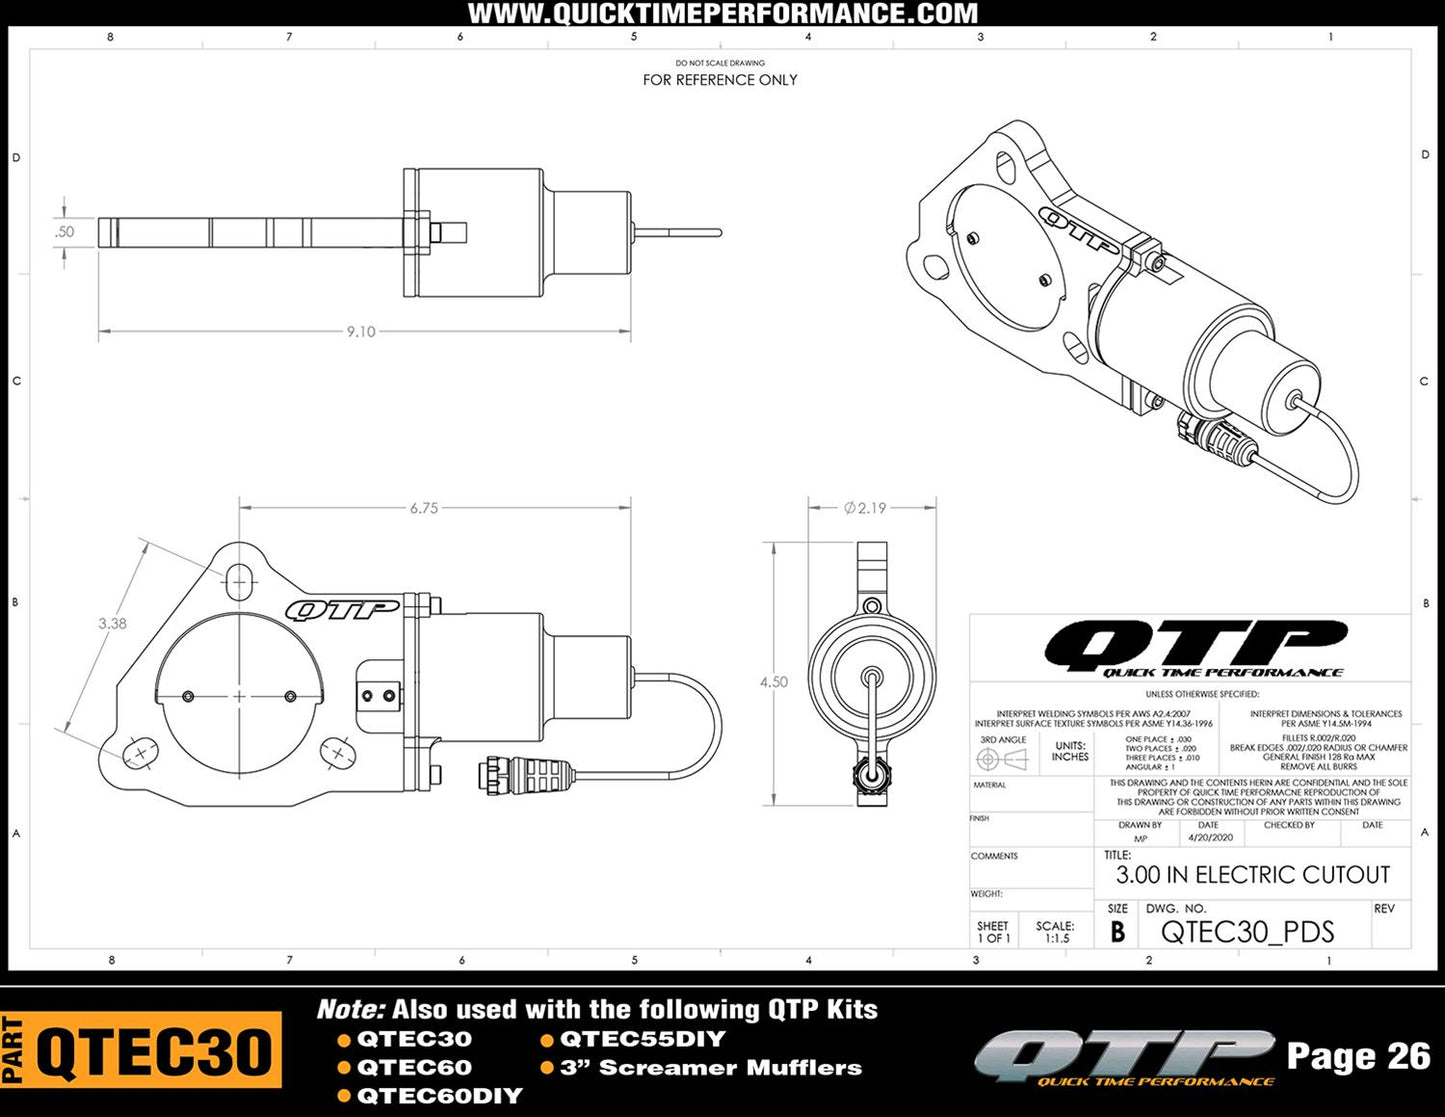 Quick Time Performance Electric Exhaust Cutouts QTEC60